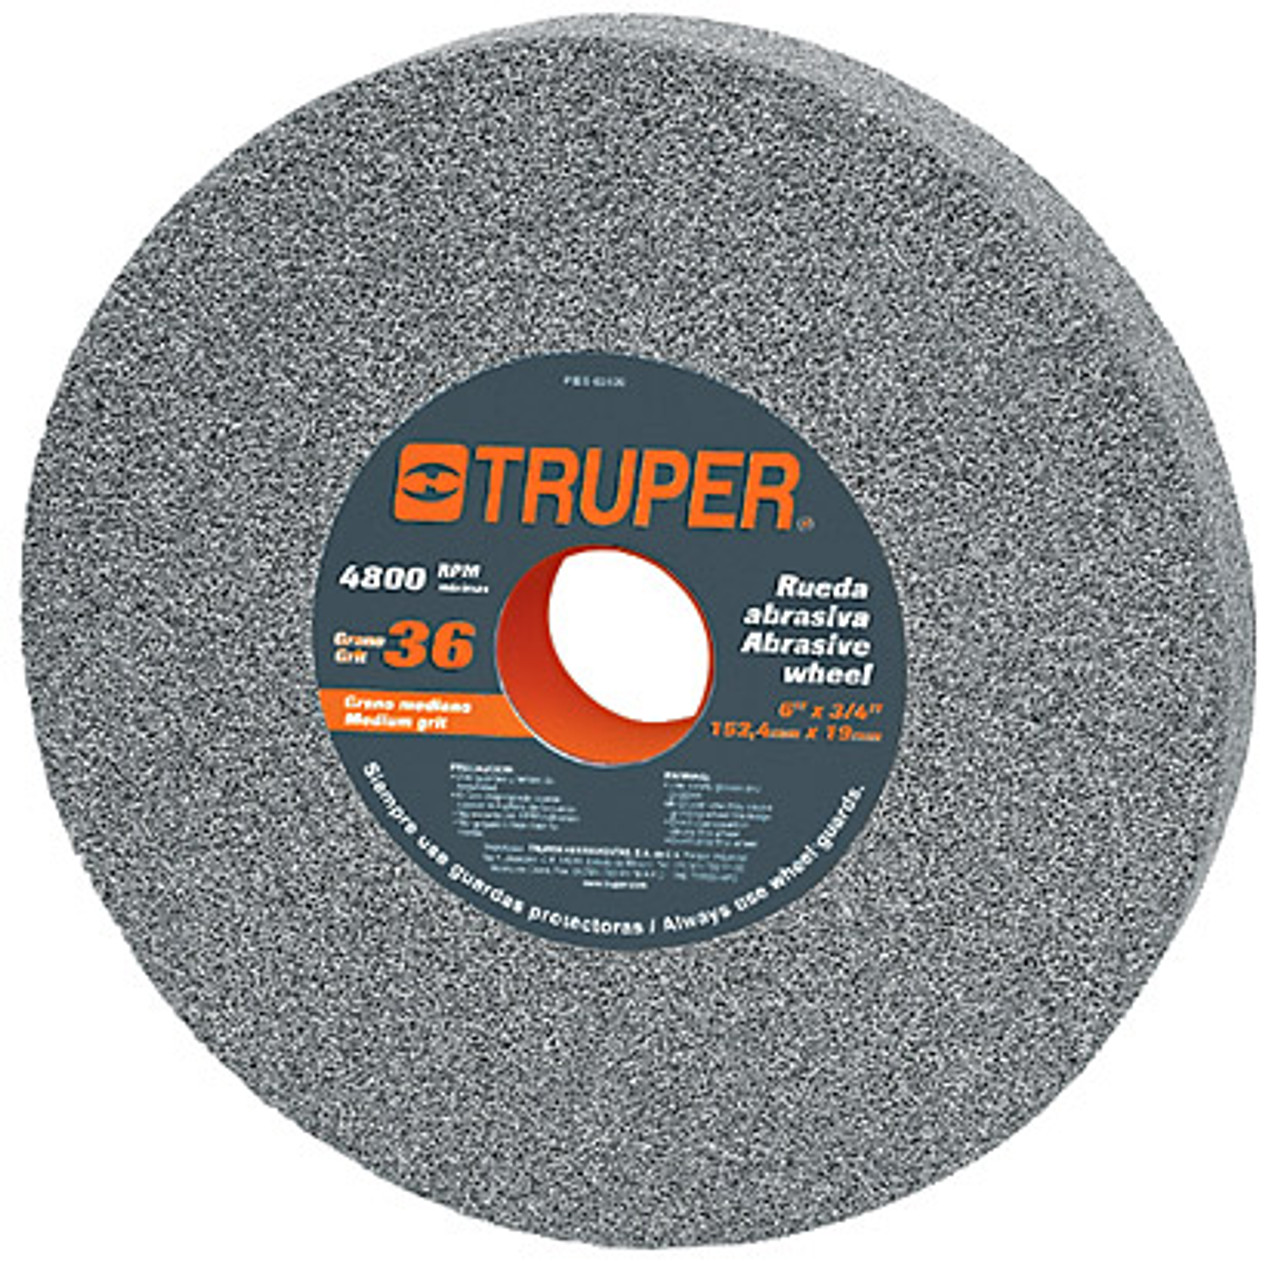 Truper 6x3/4" Grain36 Aluminium Grinding Wheel #16348